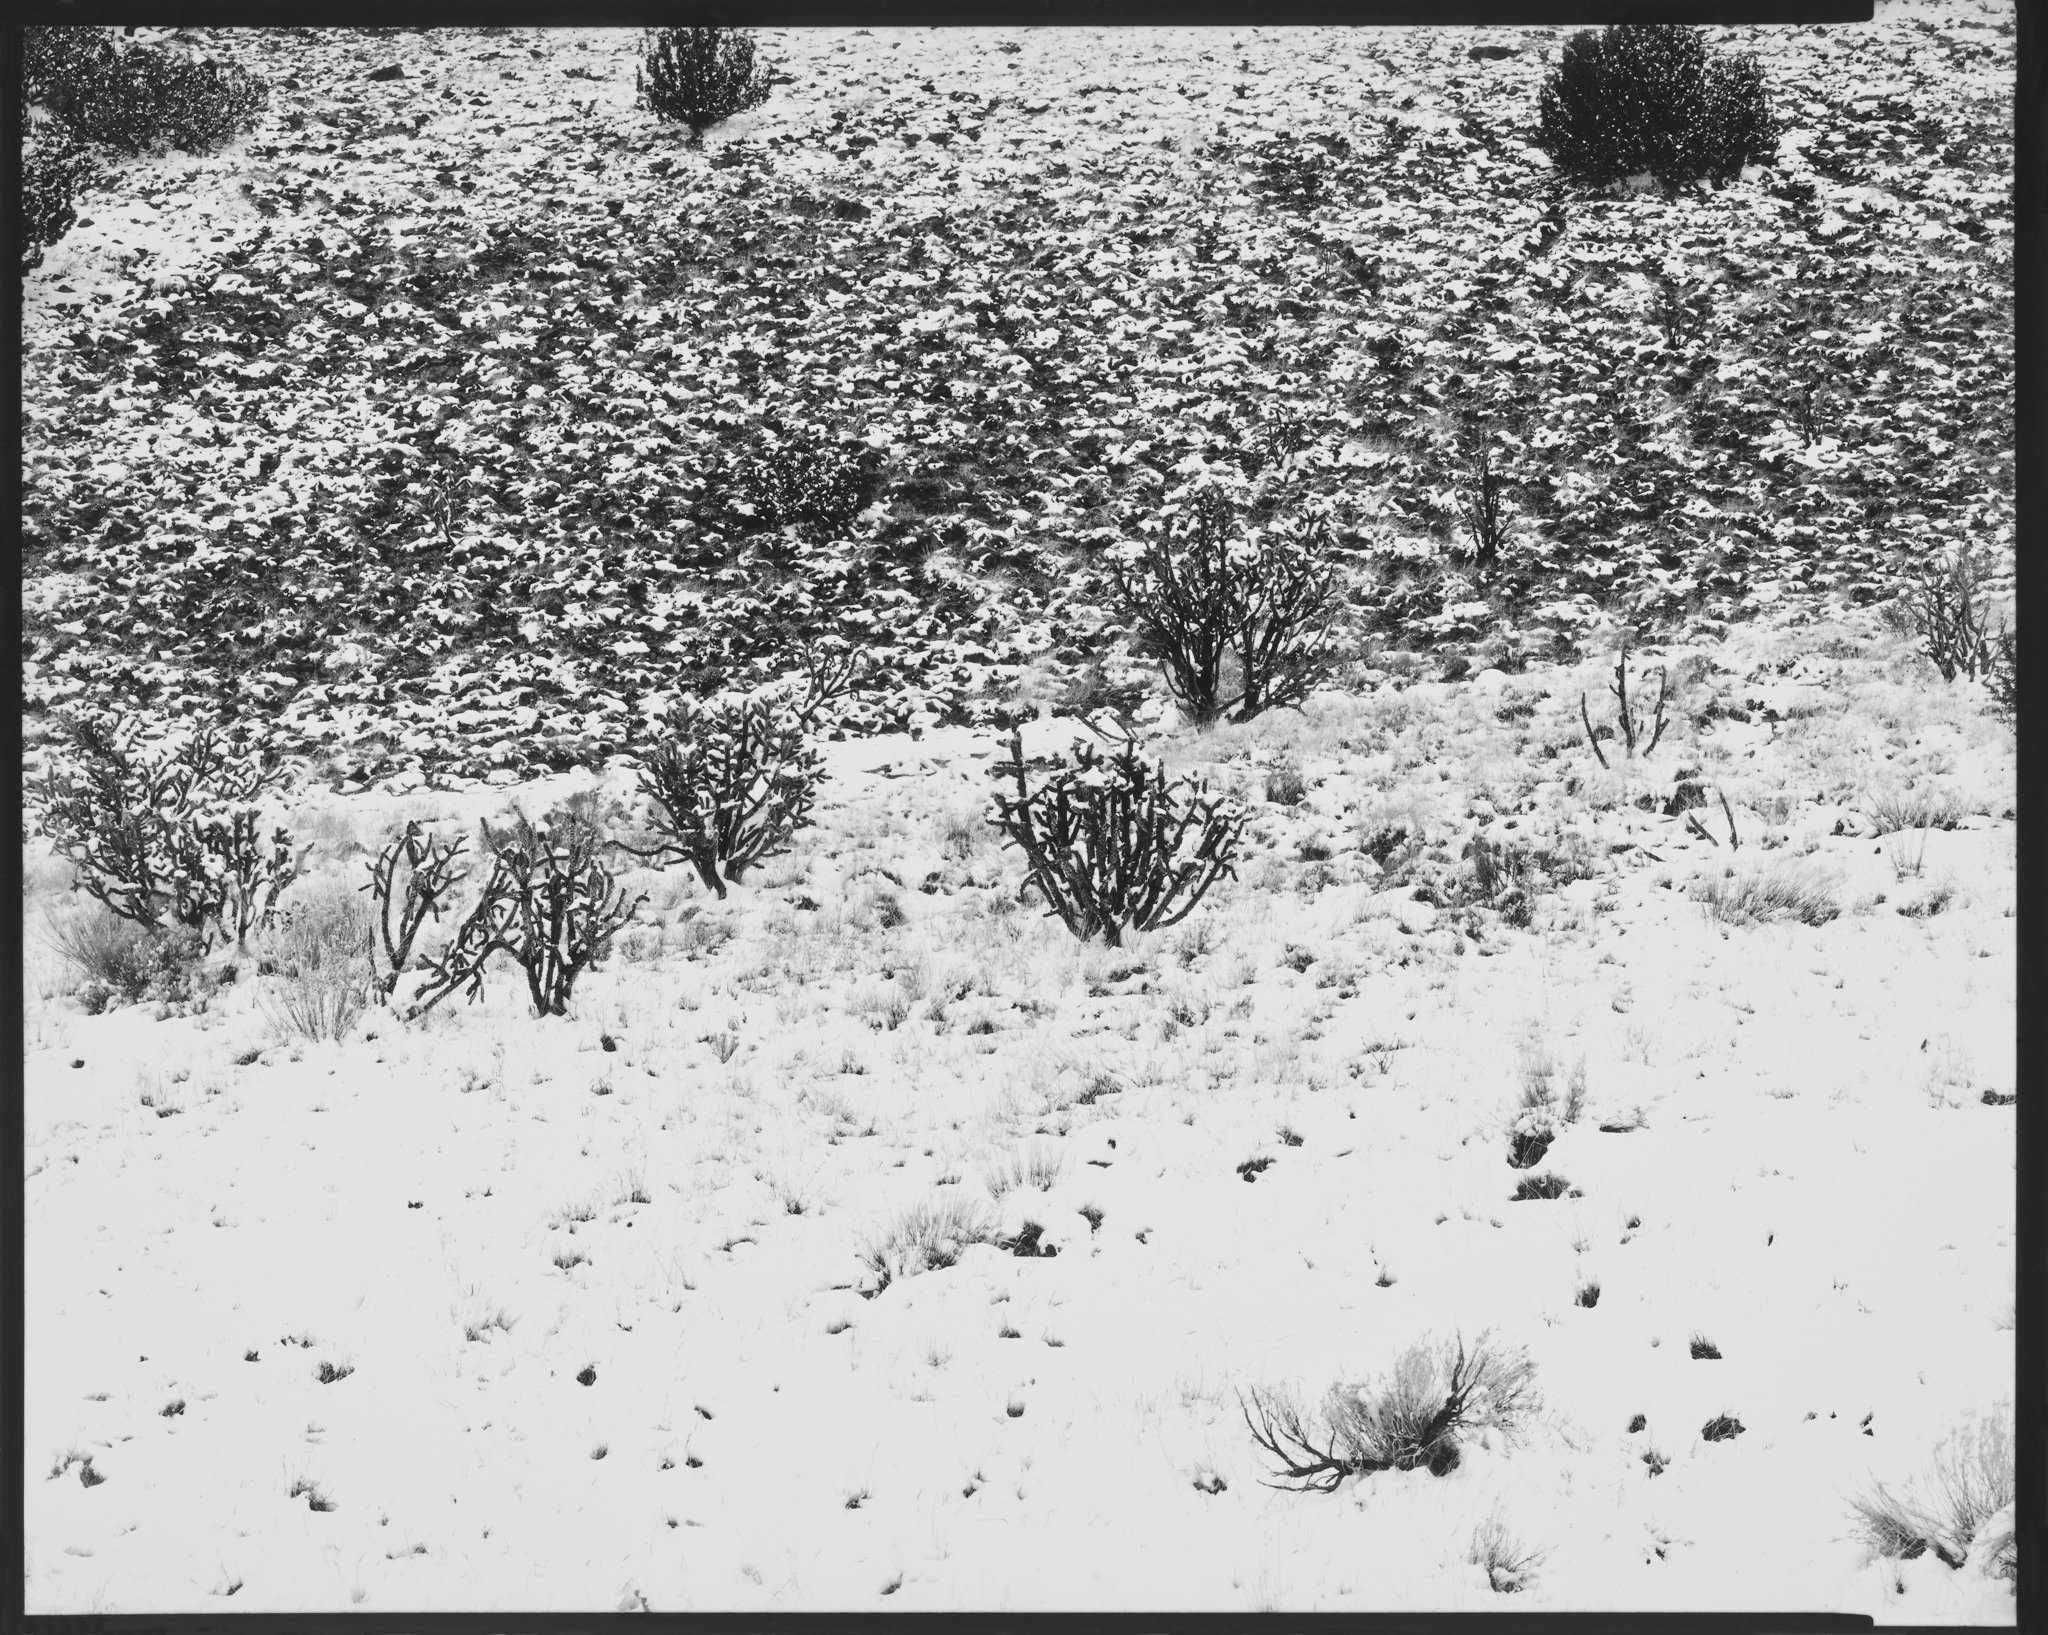 Cholla Portfolio_Cholla #79_Cholla in Winter Landscape, Galisteo, New Mexico_2020 © Nick Merrick.jpg